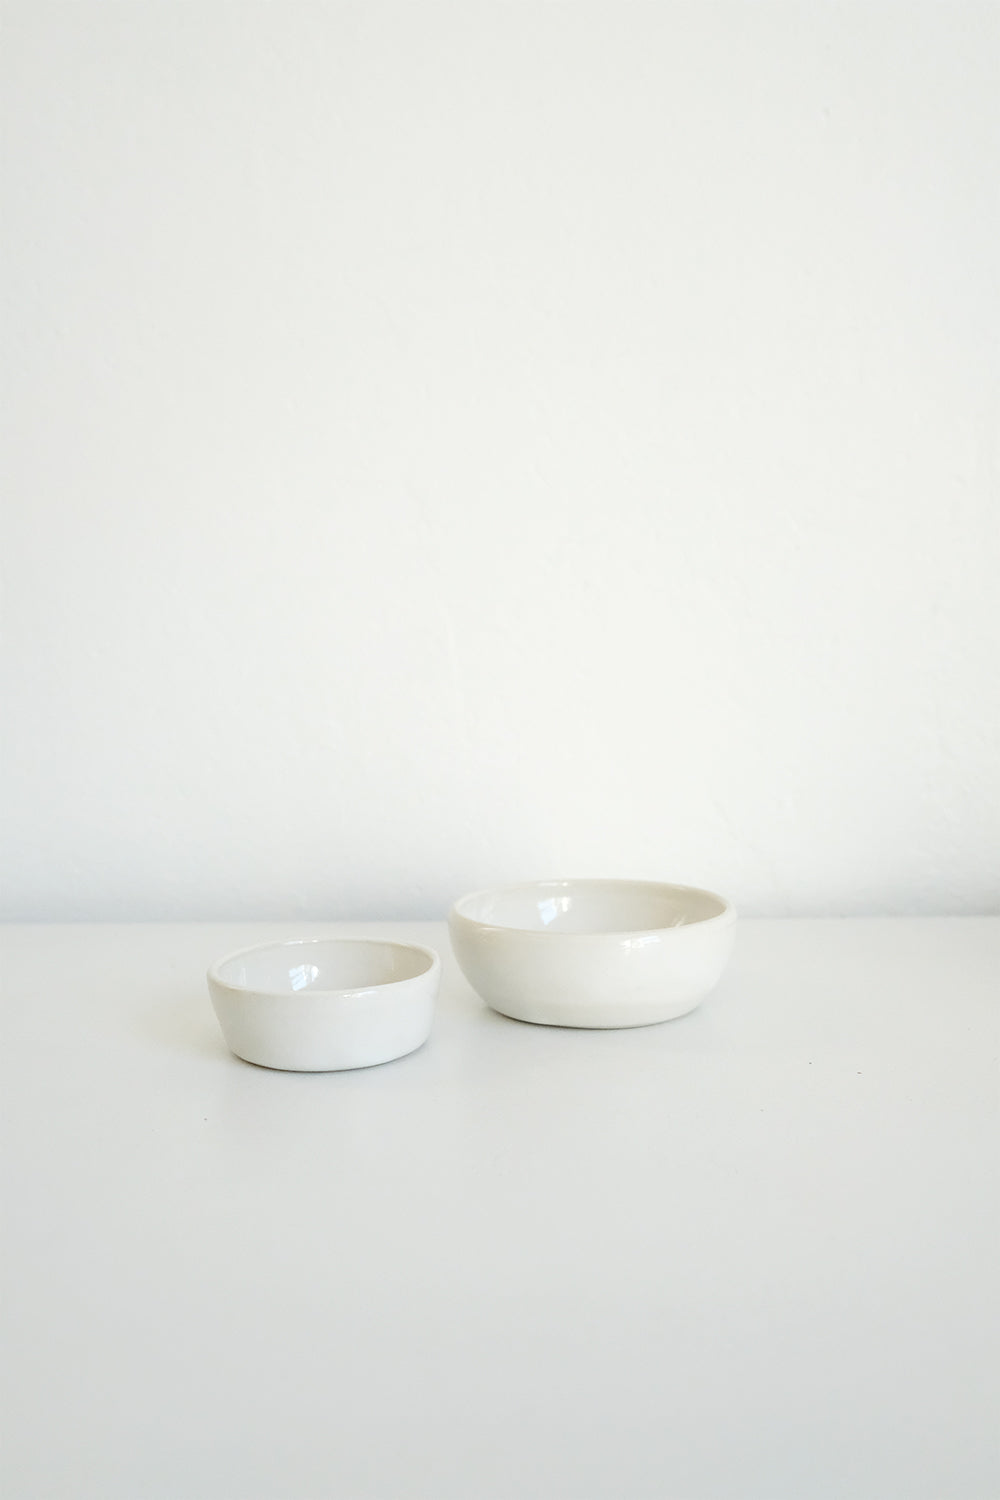 nesting pinch bowls - set of 2